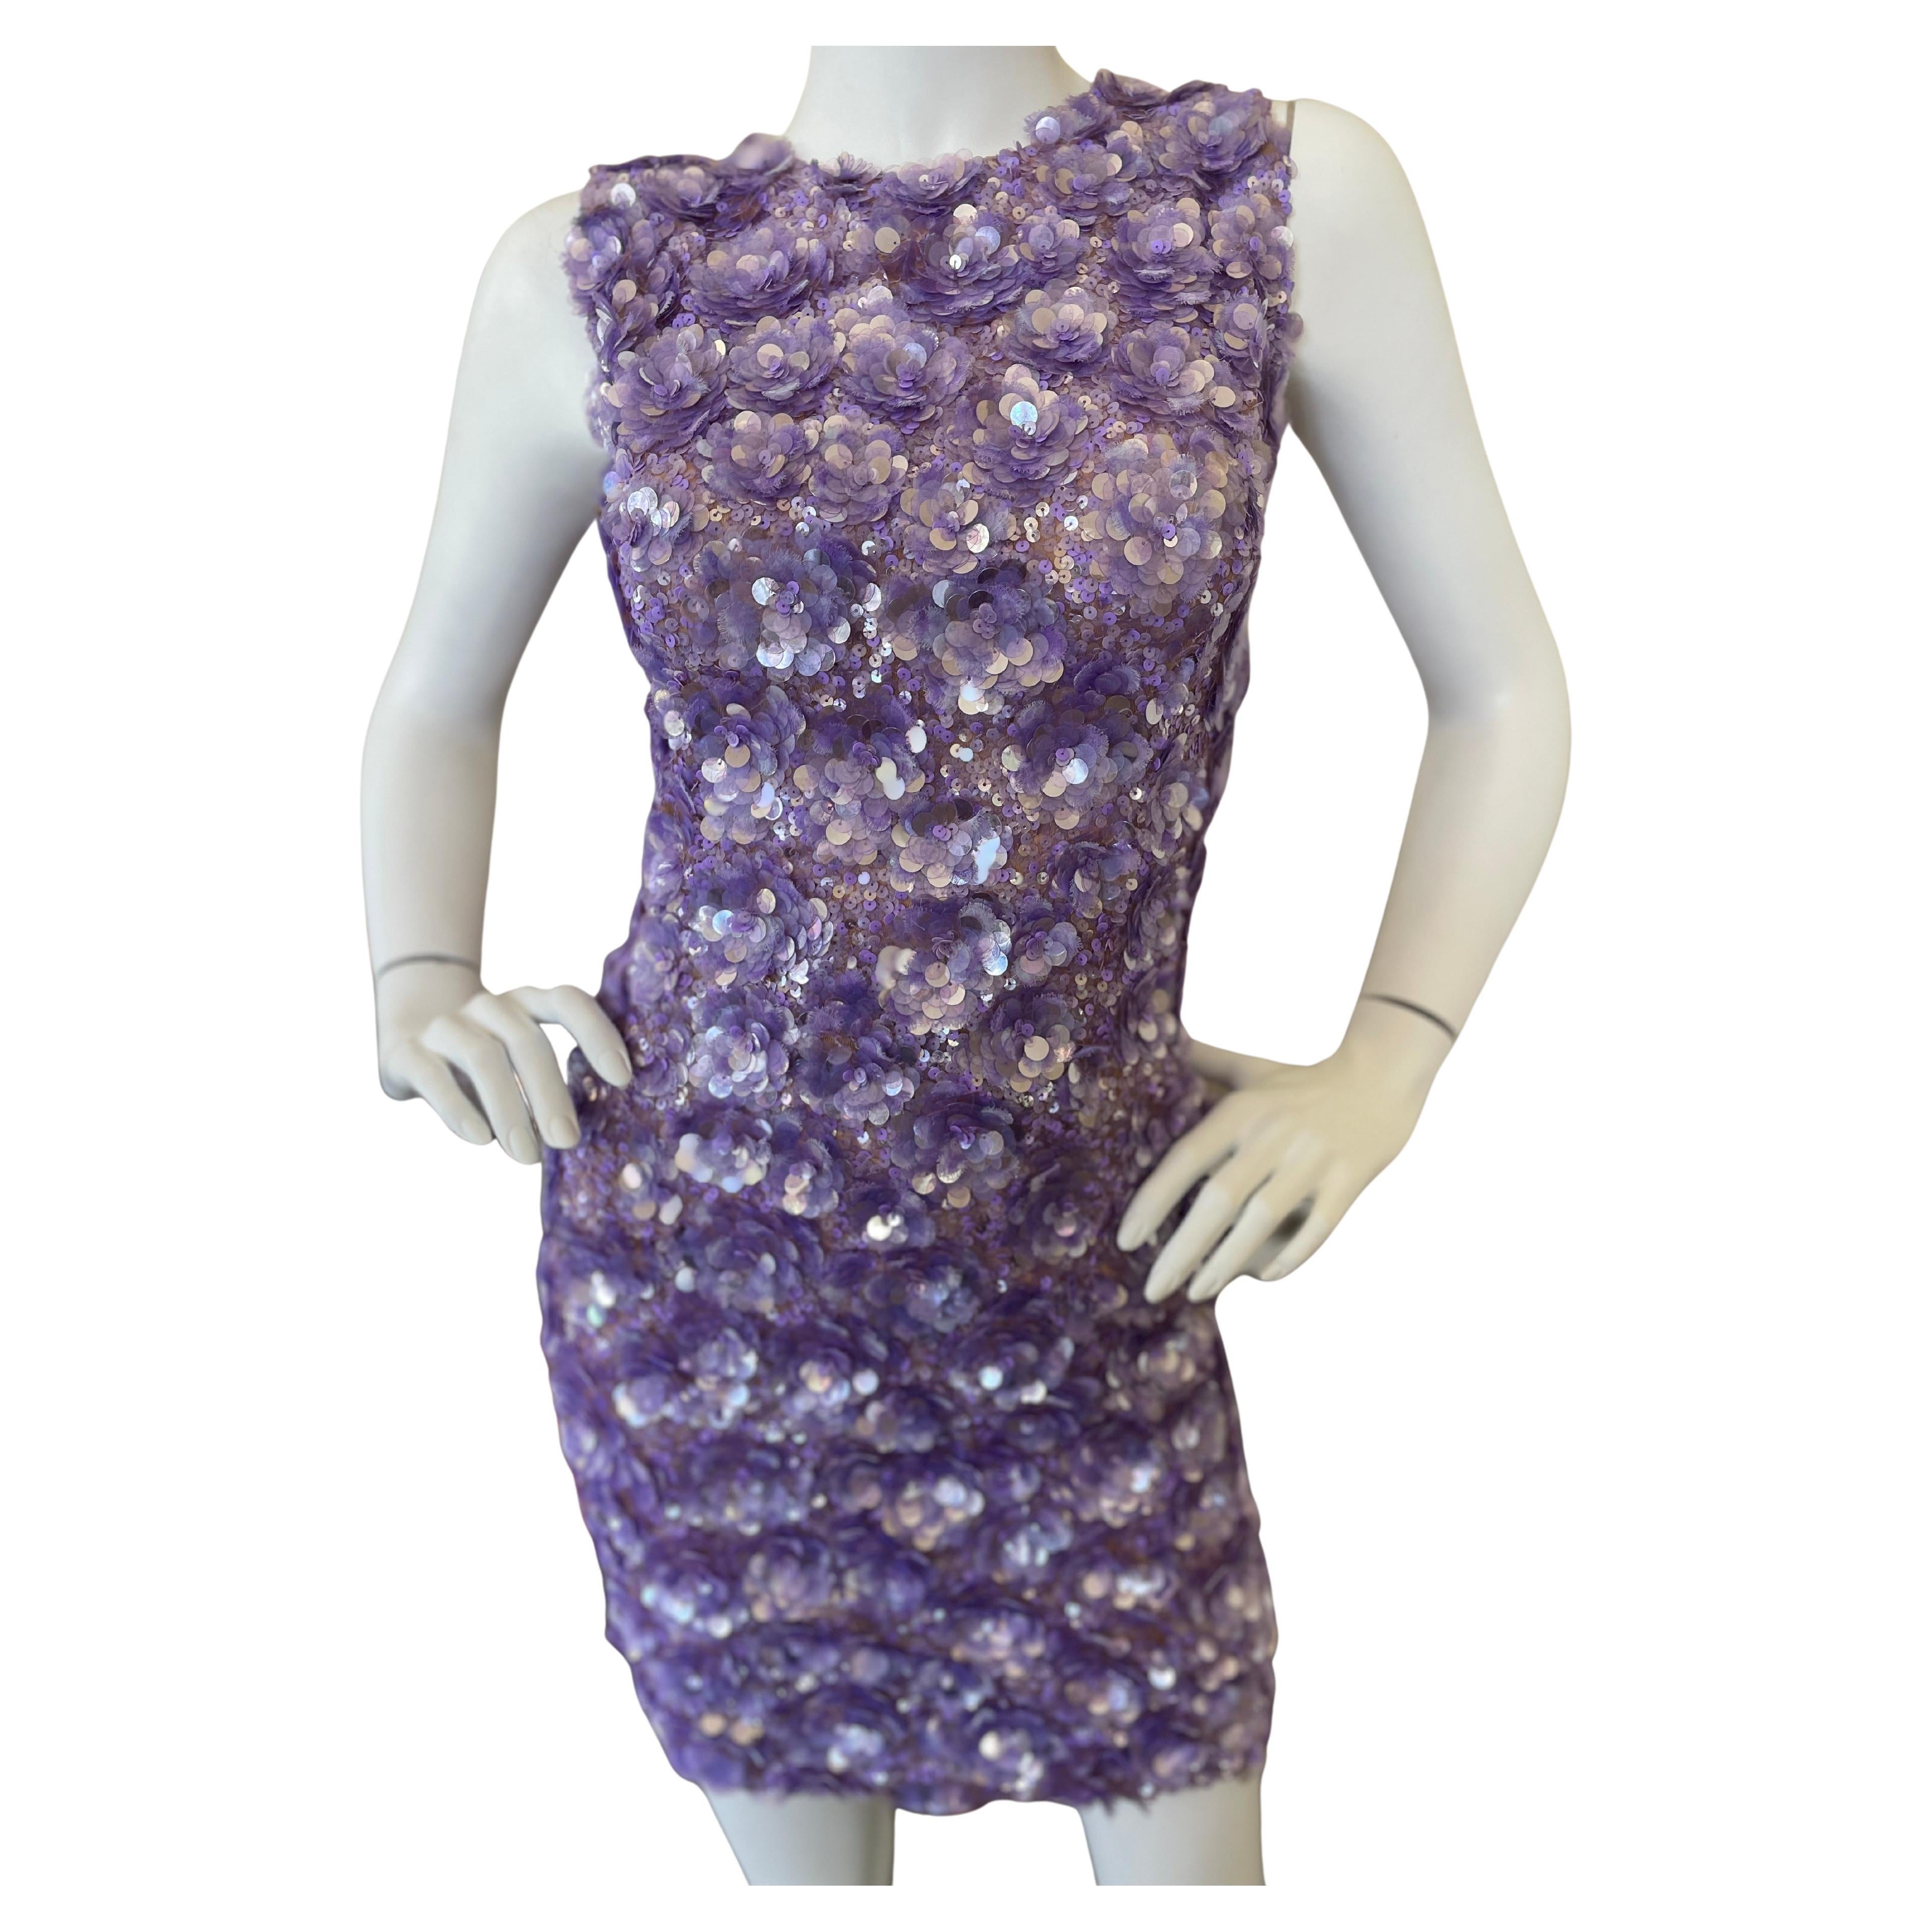 Michael Kors MirrorDot Crossover Dress Regular  Petite  Macys   Crossover dress Dresses Michael kors clothes